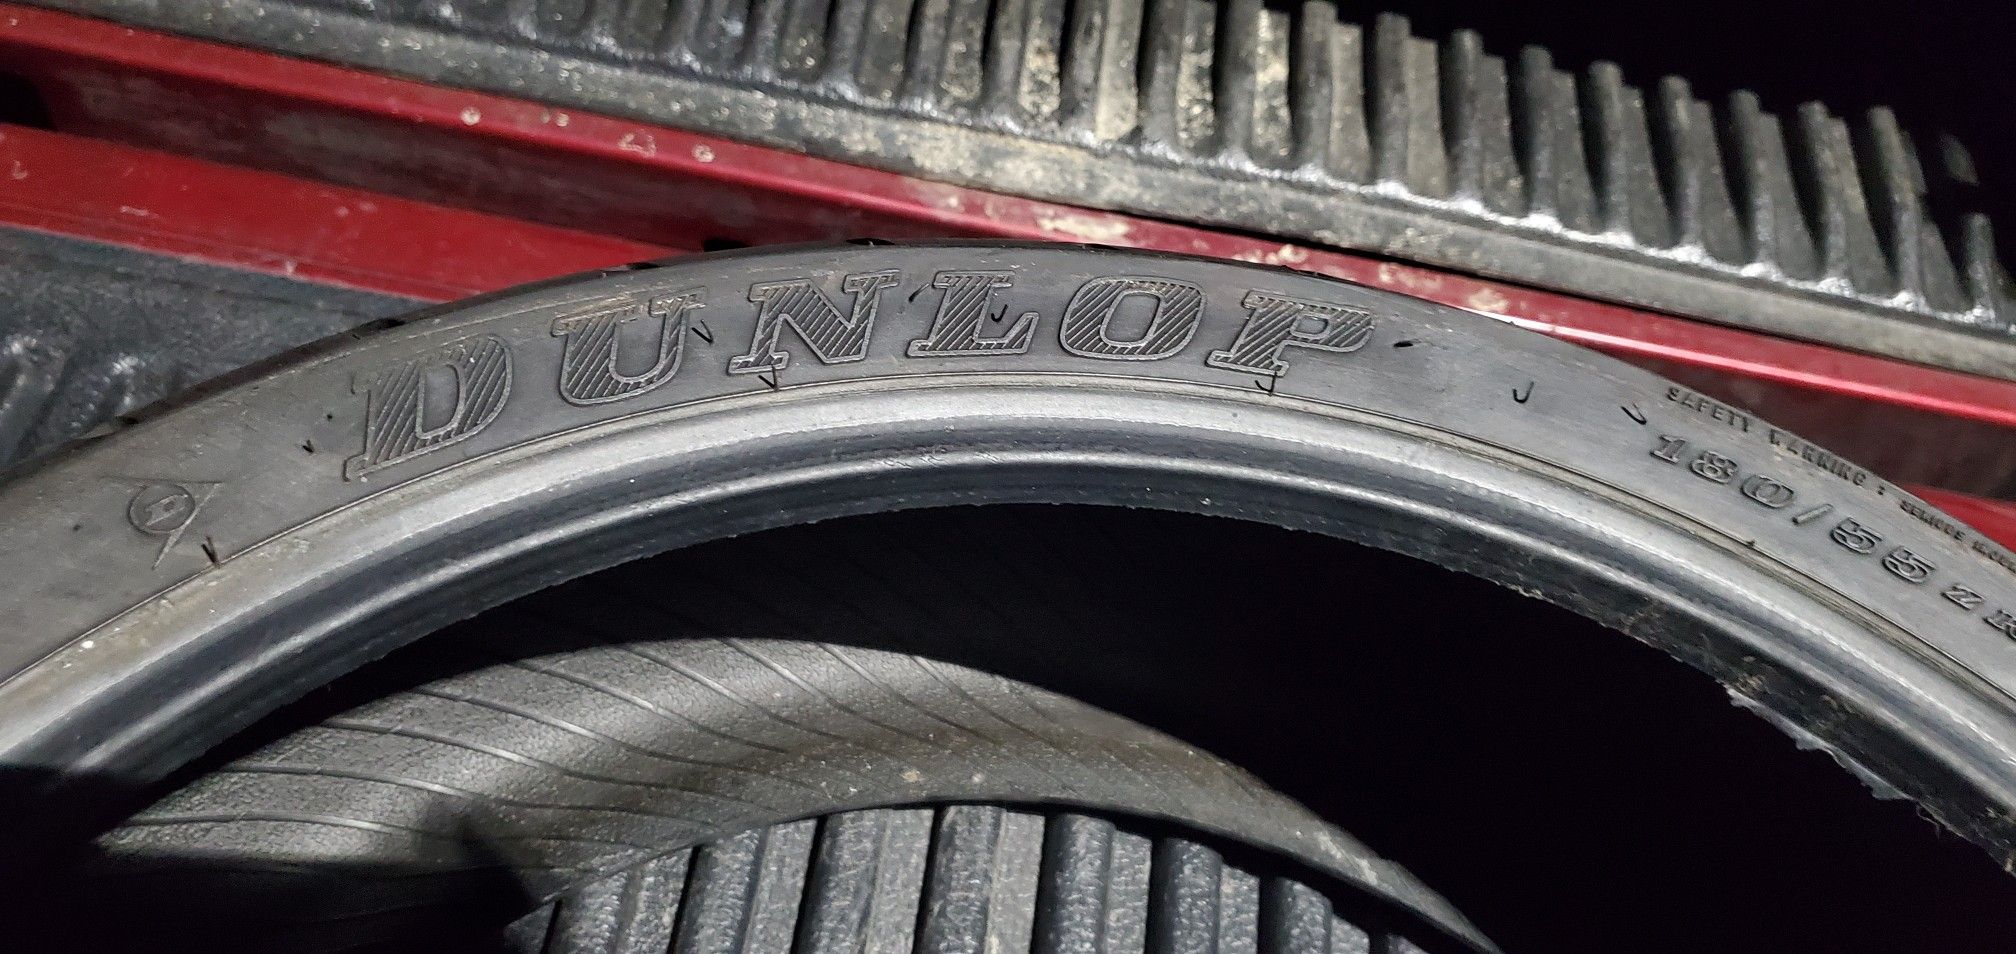 Dunlop rear motorcycle tire